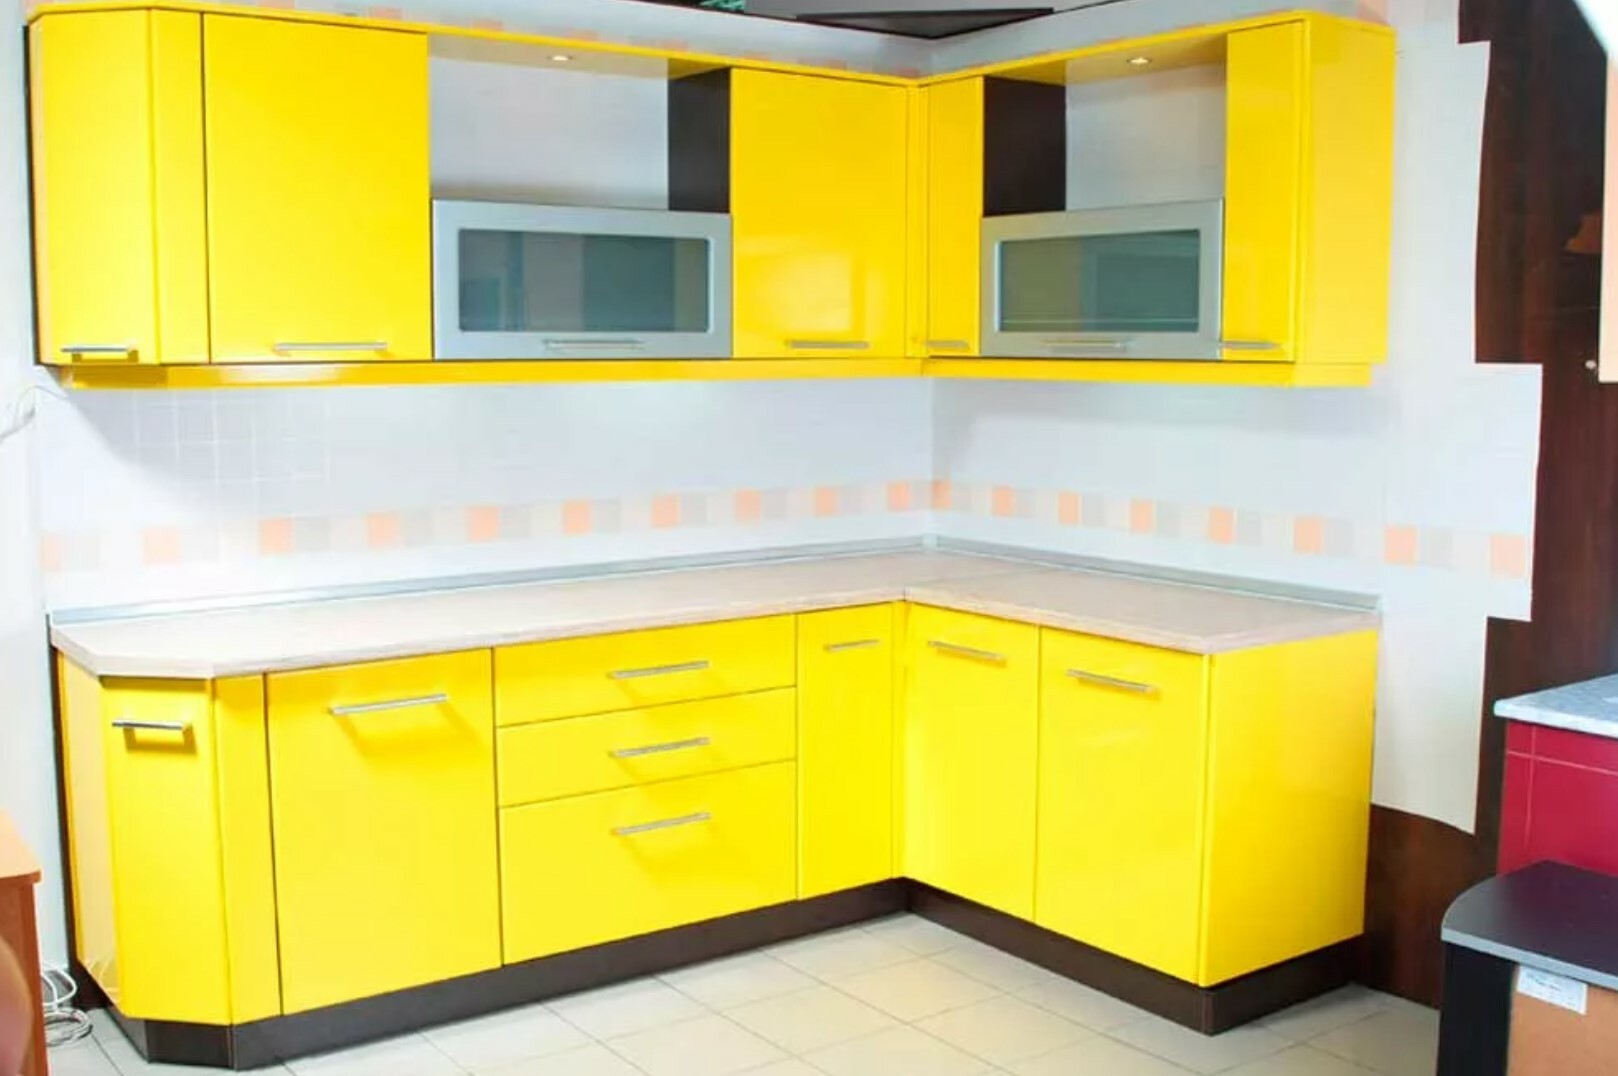 Купить желтую кухню. Желтый кухонный гарнитур. Кухонный гарнитур желтого цвета. Желтая угловая кухня. Желтый кухонный гарнитур угловой.